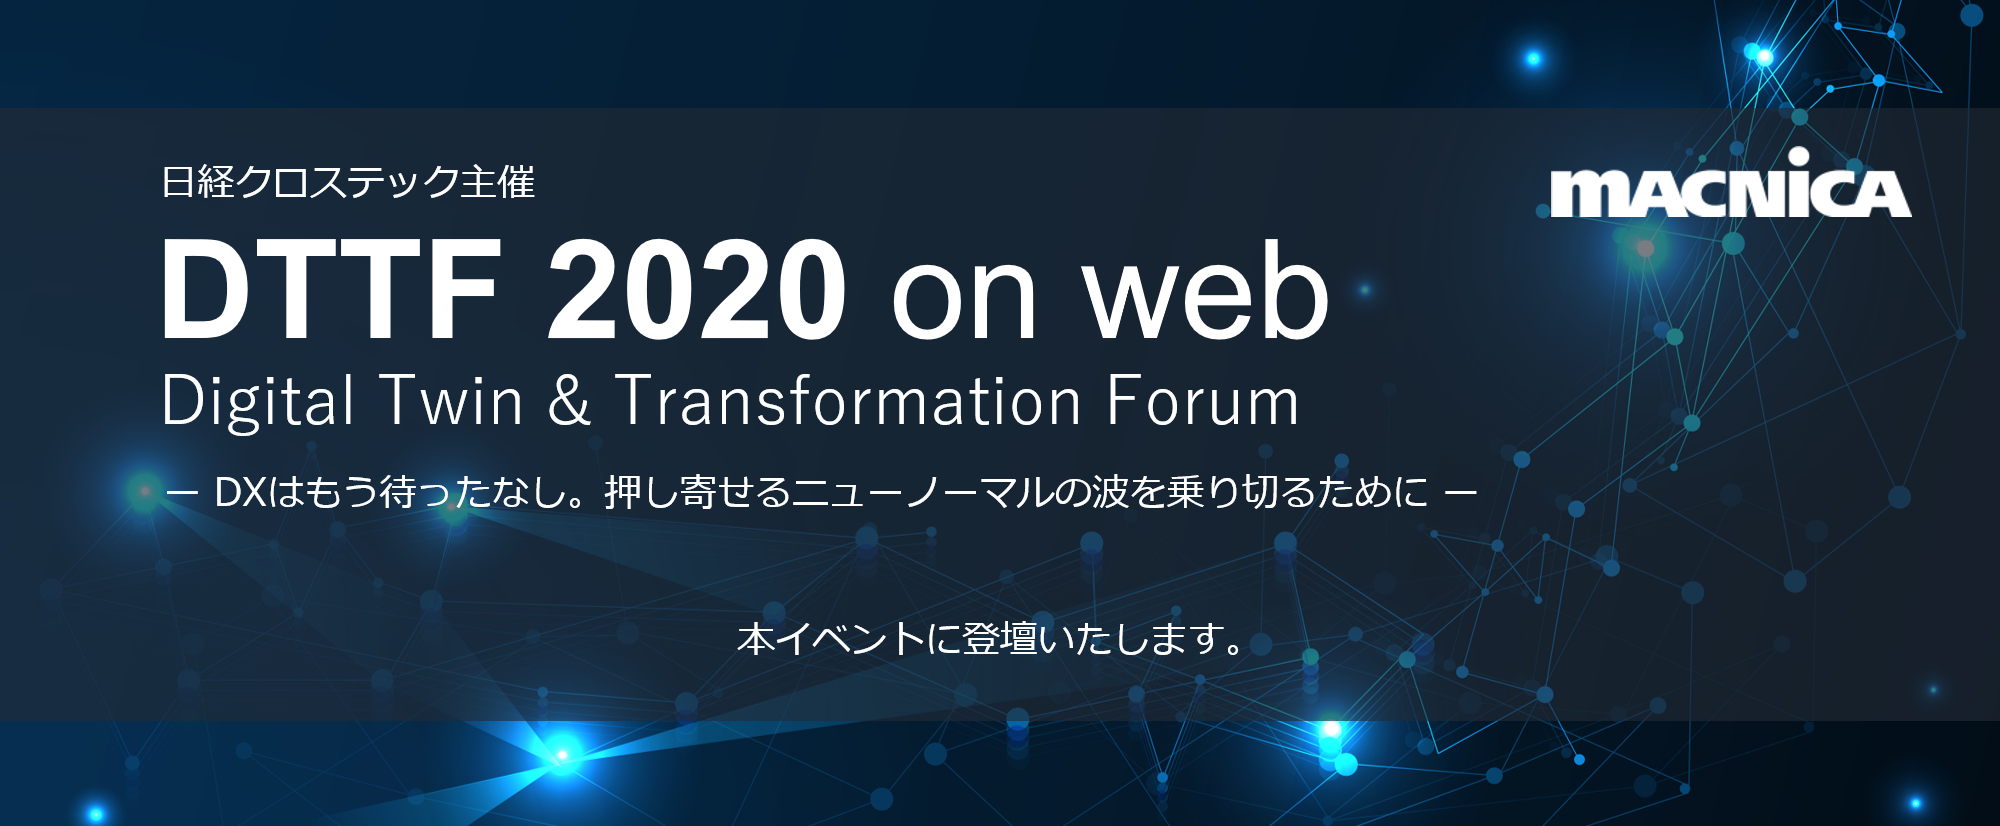 DTTF（Digital Twin＆Transformation Forum）2020 on webに登壇します。